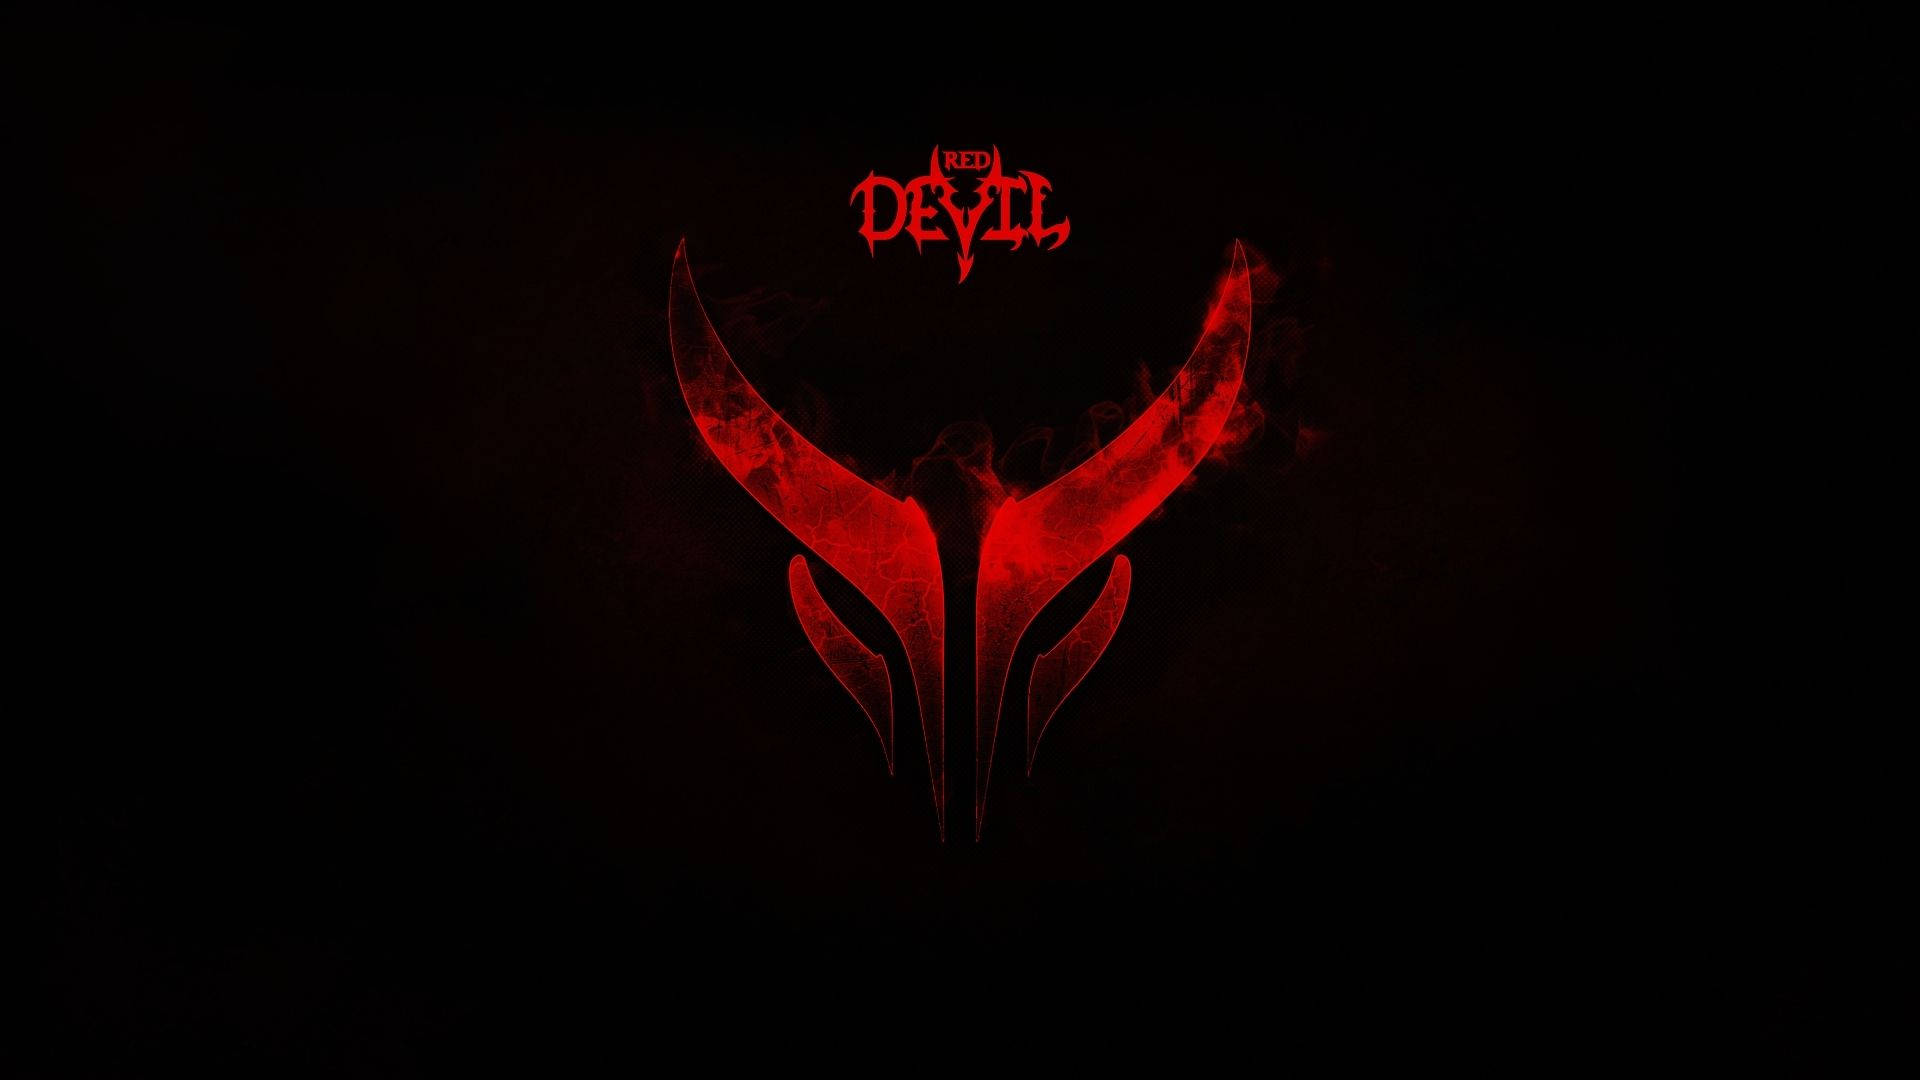 Red Devil Silhouette Wallpaper